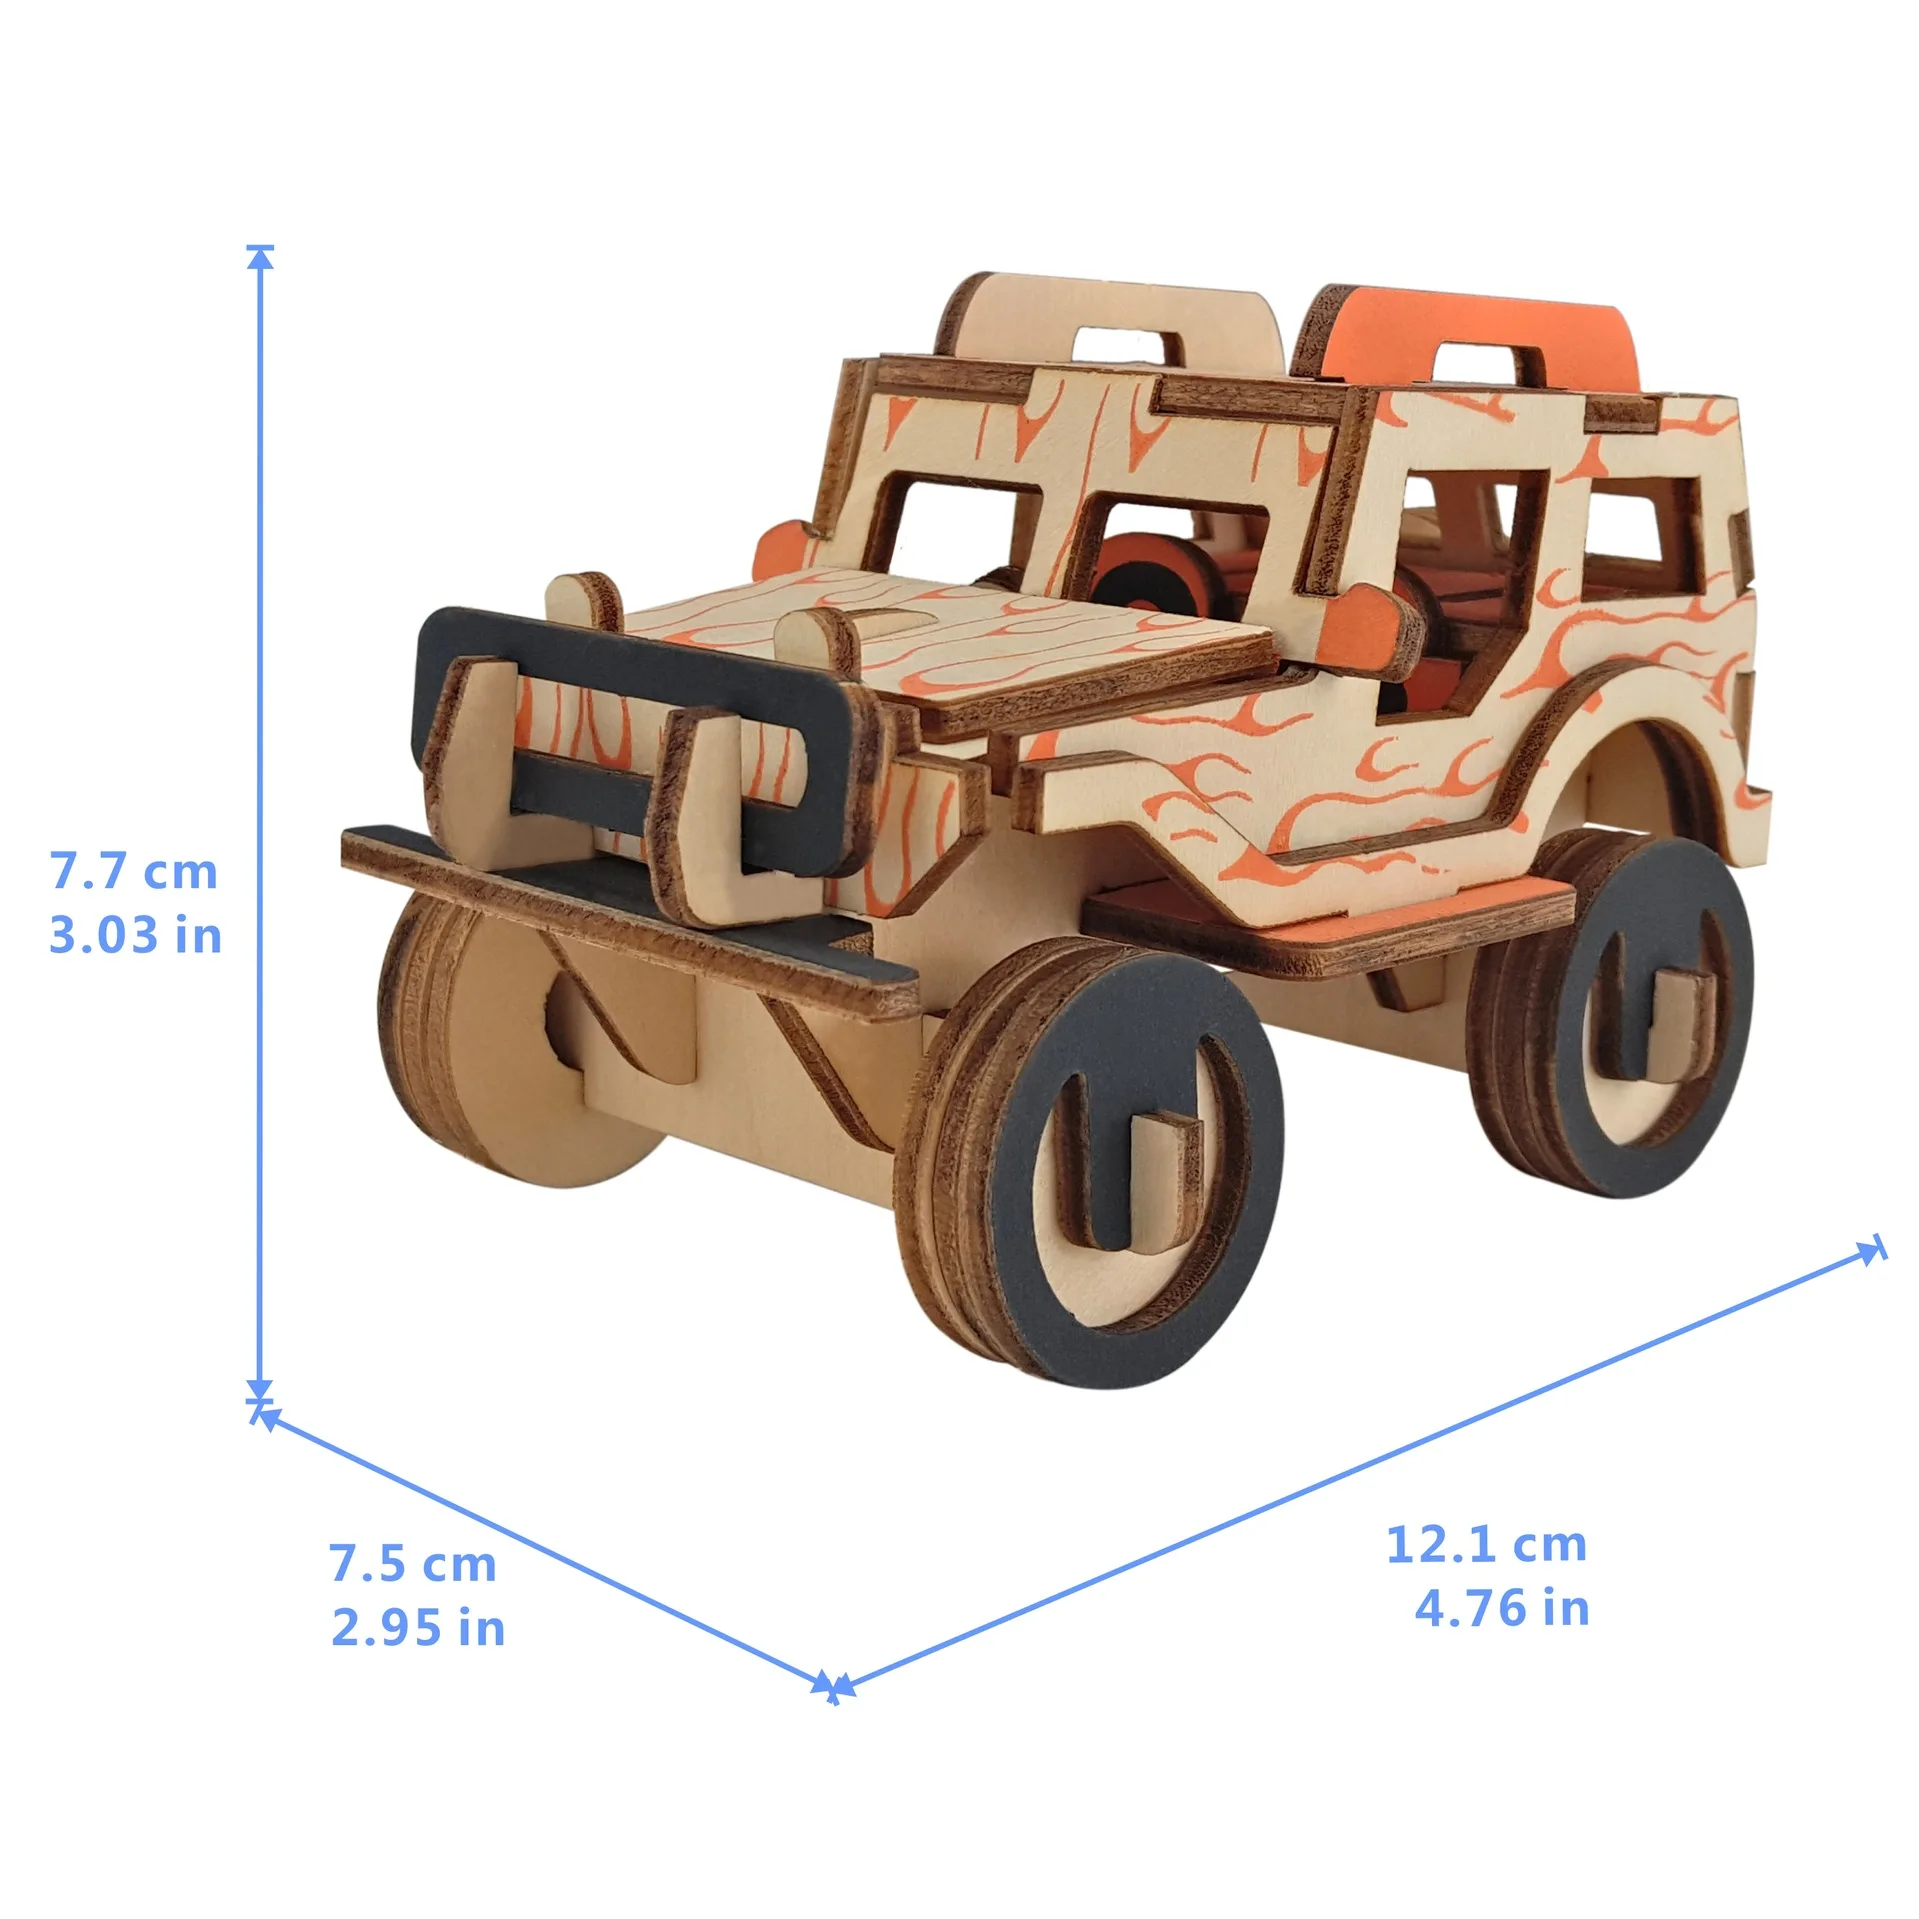 DIY Assemble Metal Model Toy Kits Car Truck Building Puzzles for Kids Children 